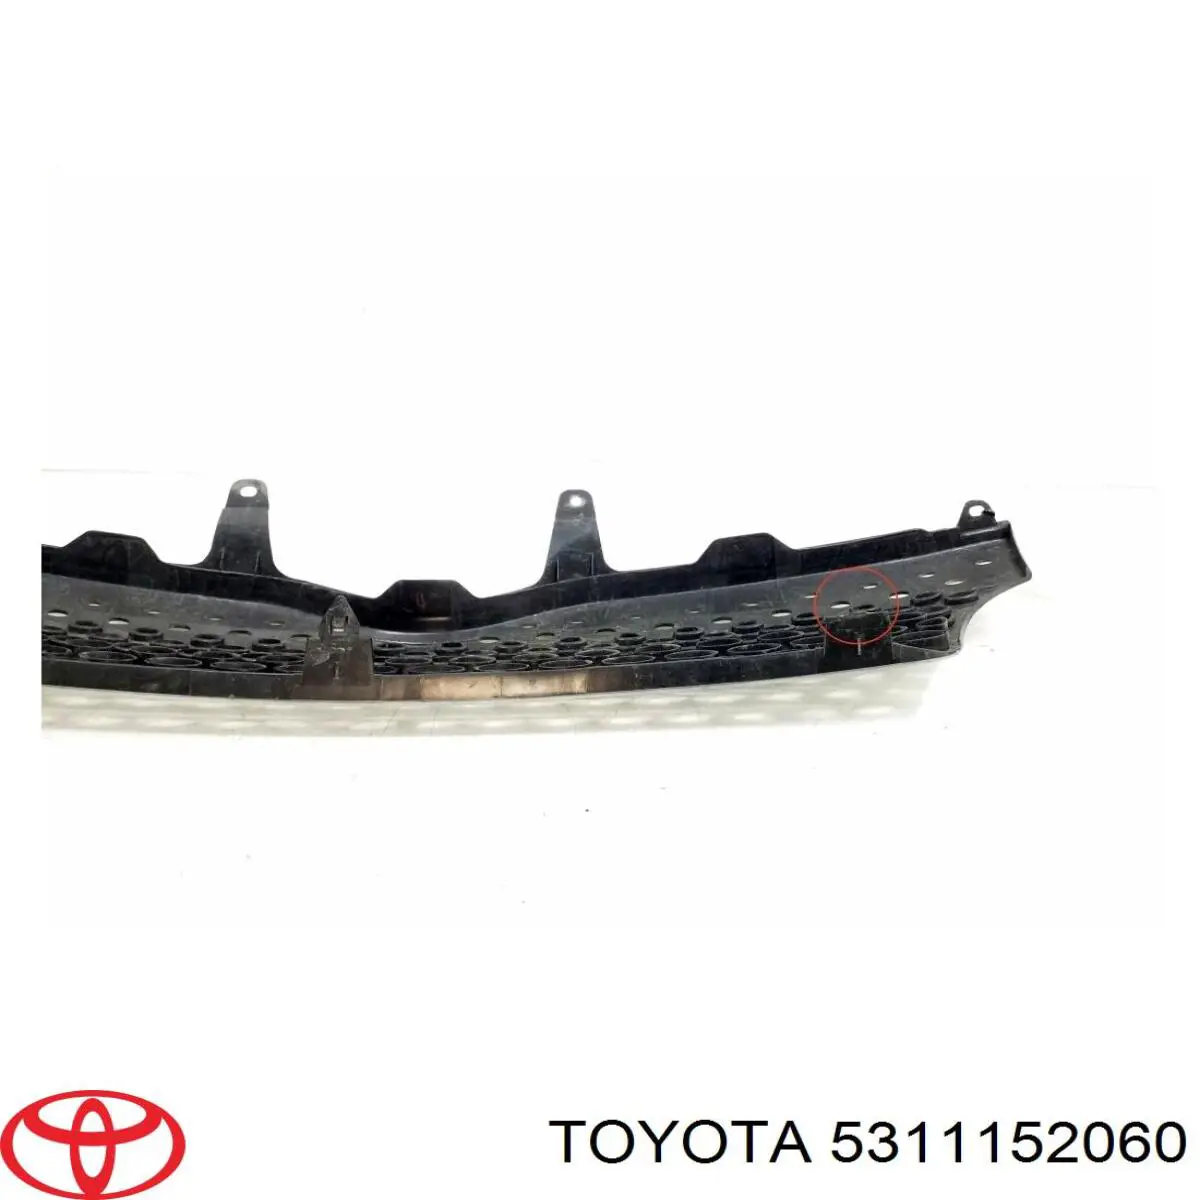 5311152060 Toyota parrilla